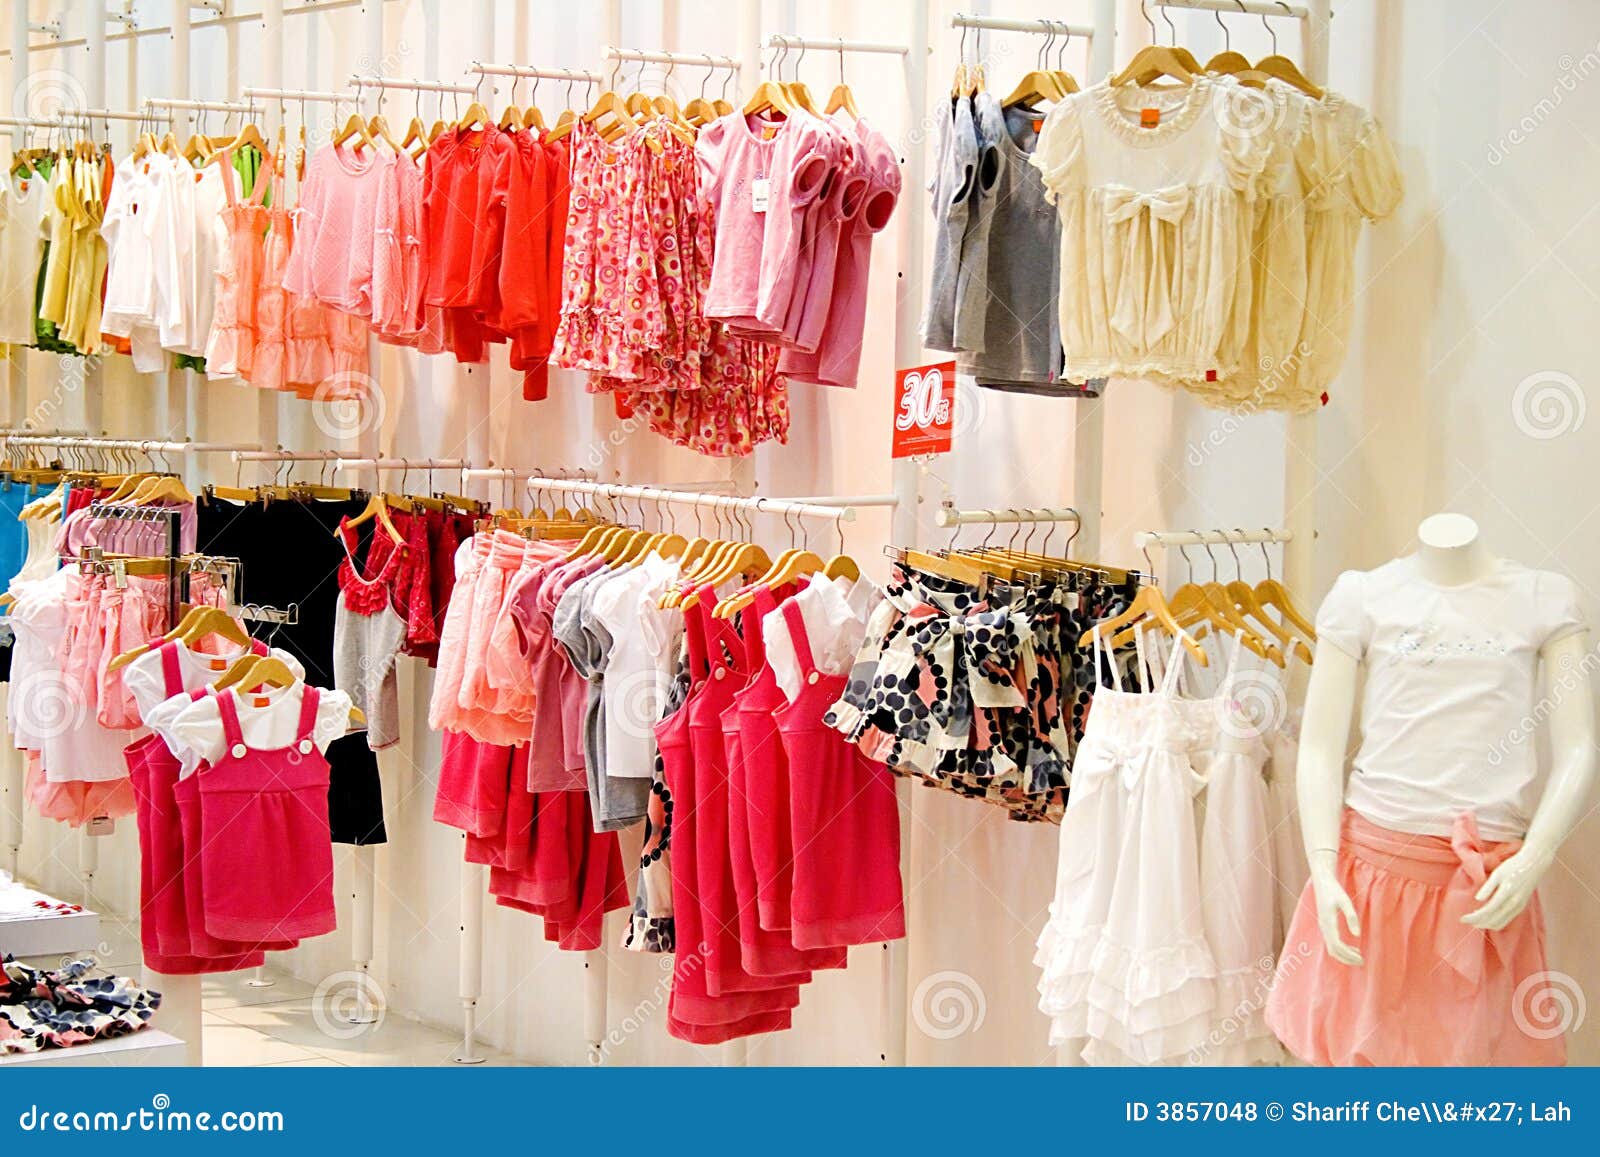 children's clothing retailers